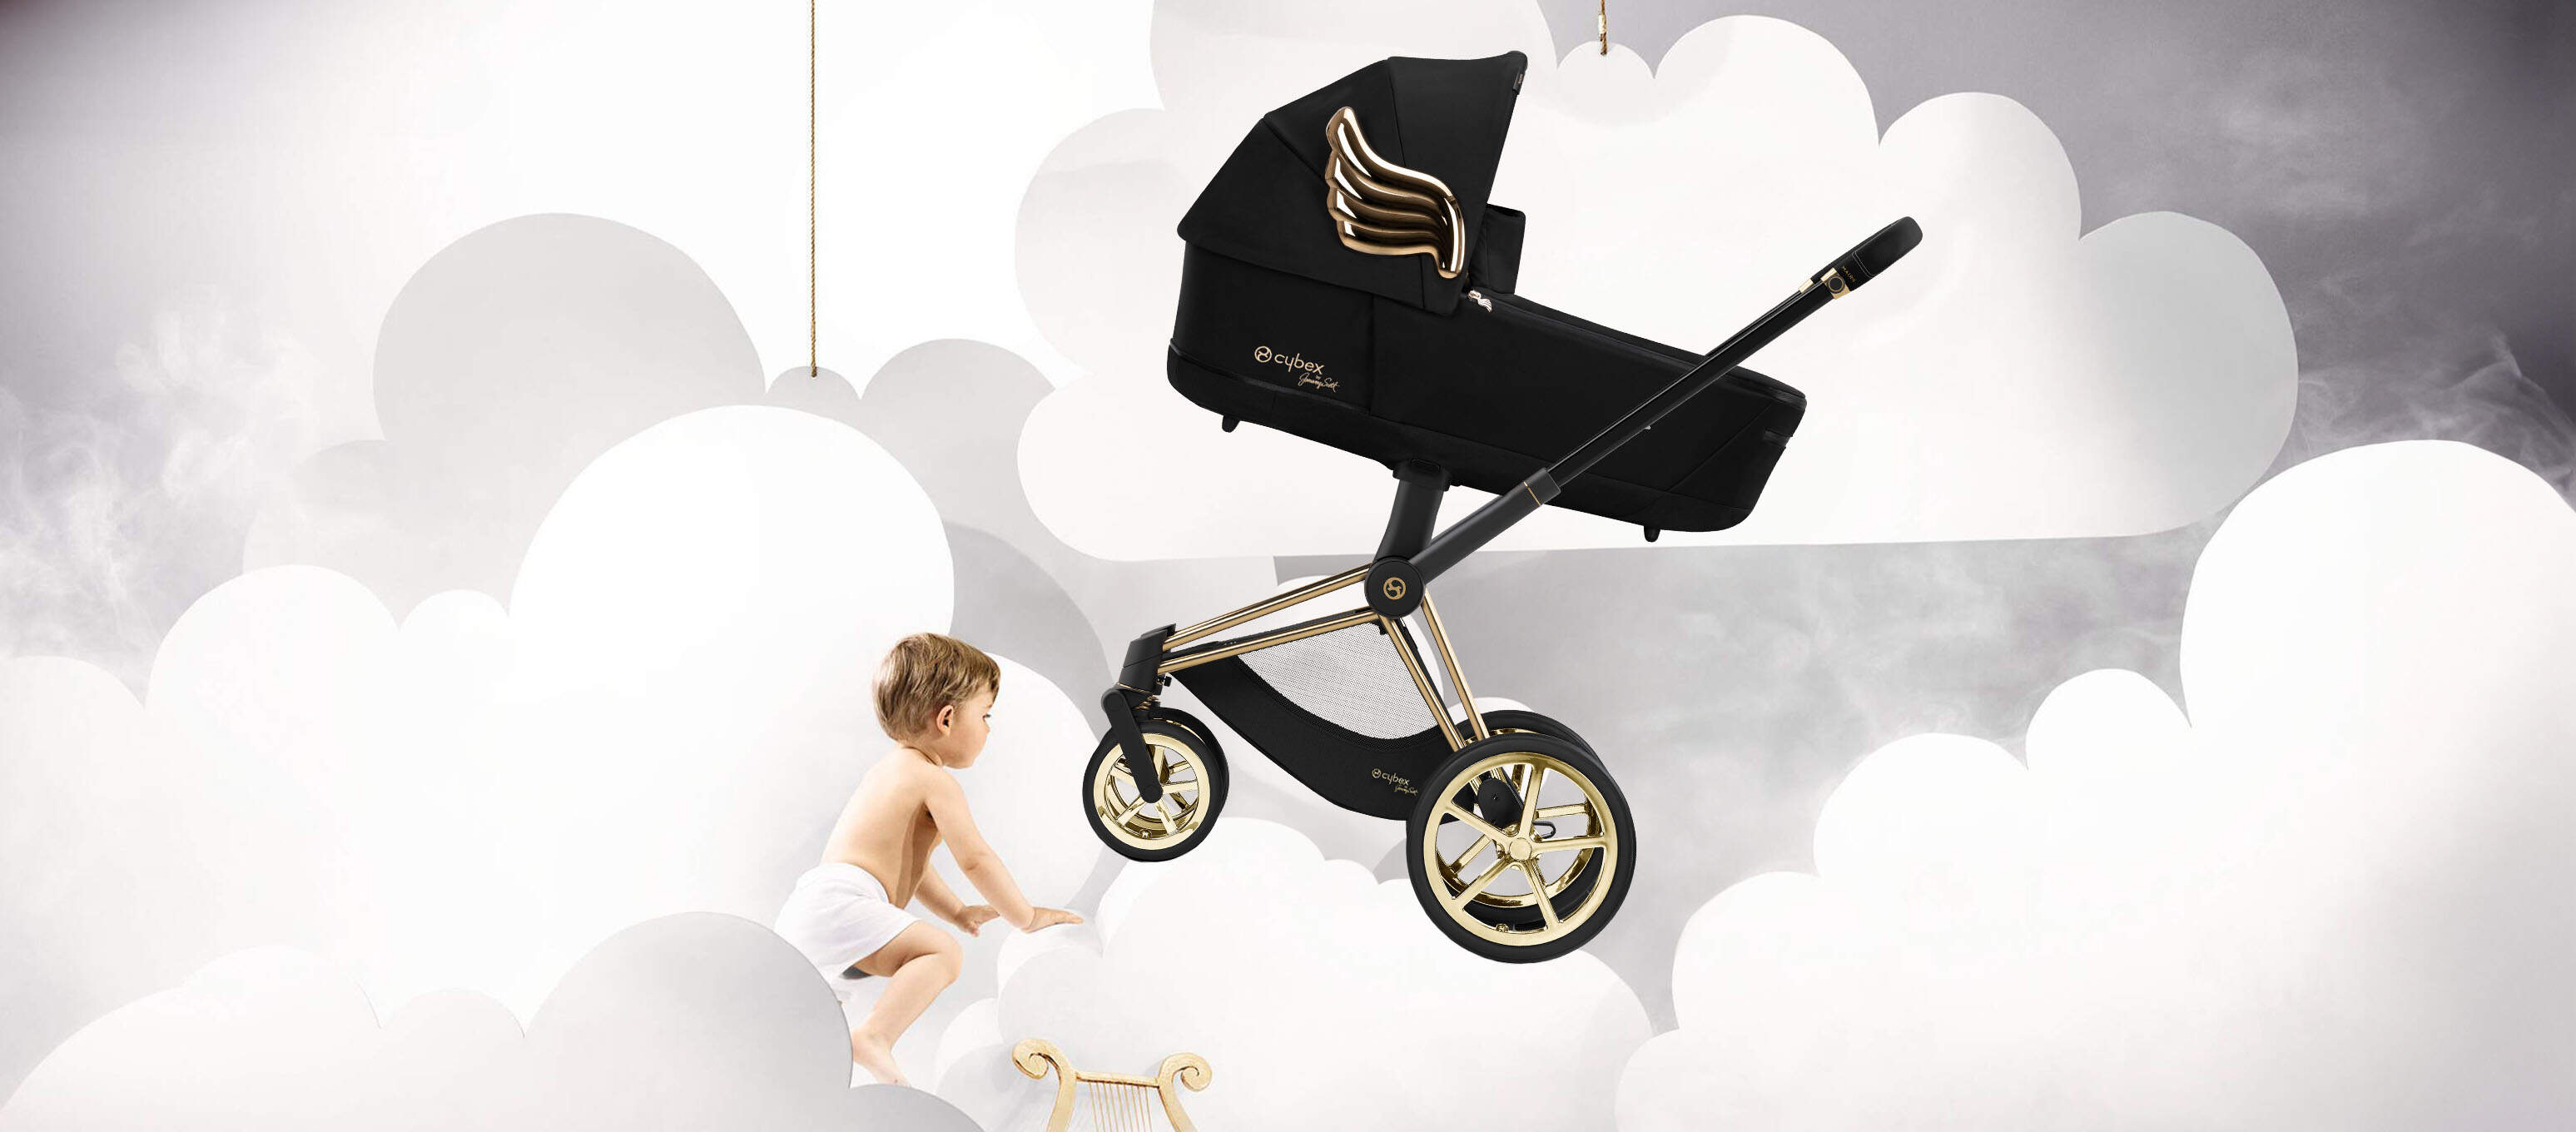 Bild på barnvagn och baby med Cybex by Jeremy Scott Wings-kollektionen